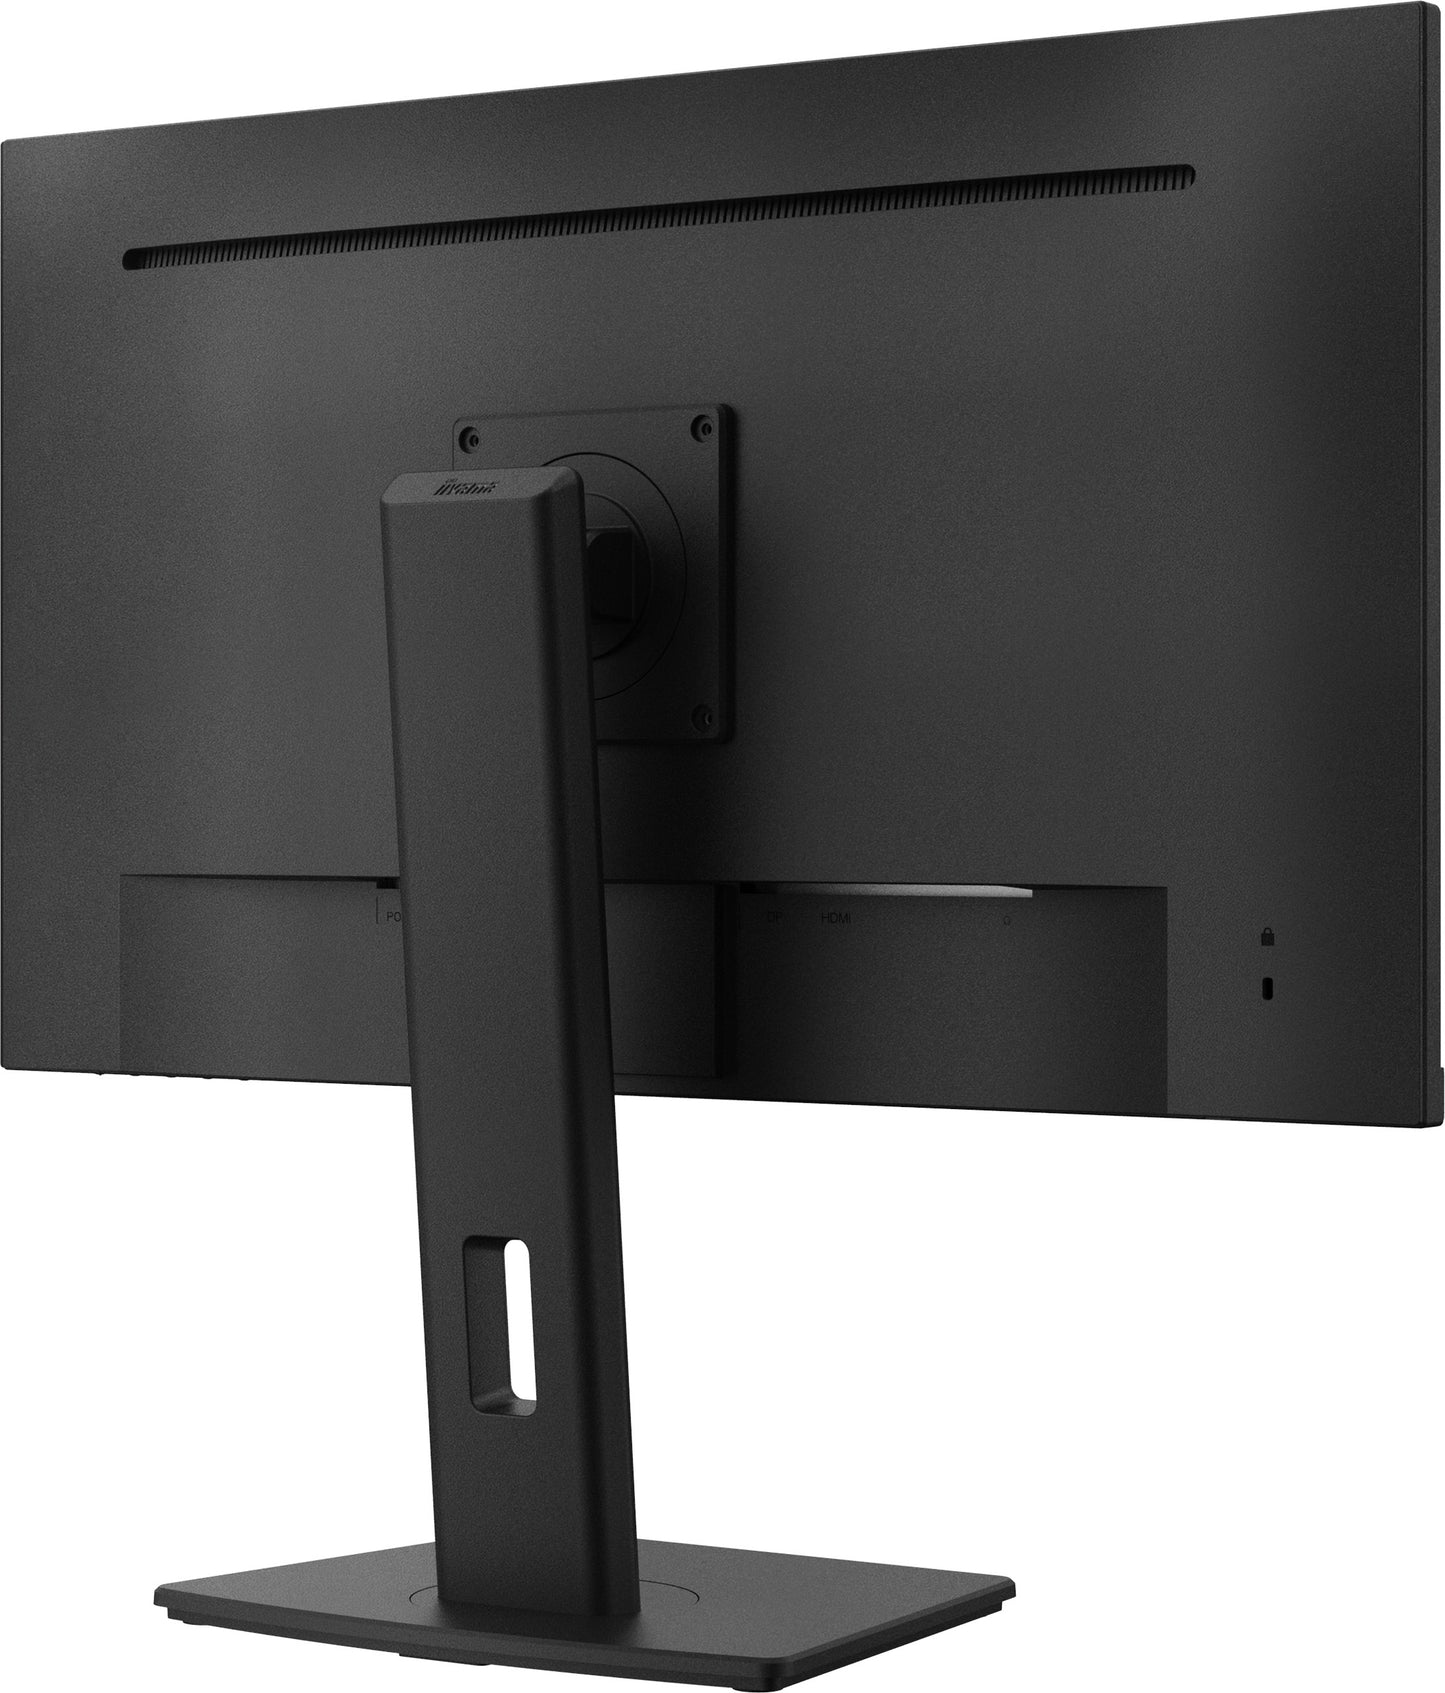 iiyama ProLite XUB2793HS-B6 27" Full HD IPS monitor with edge-to-edge design, for multi-monitor setups with height adjustable stand